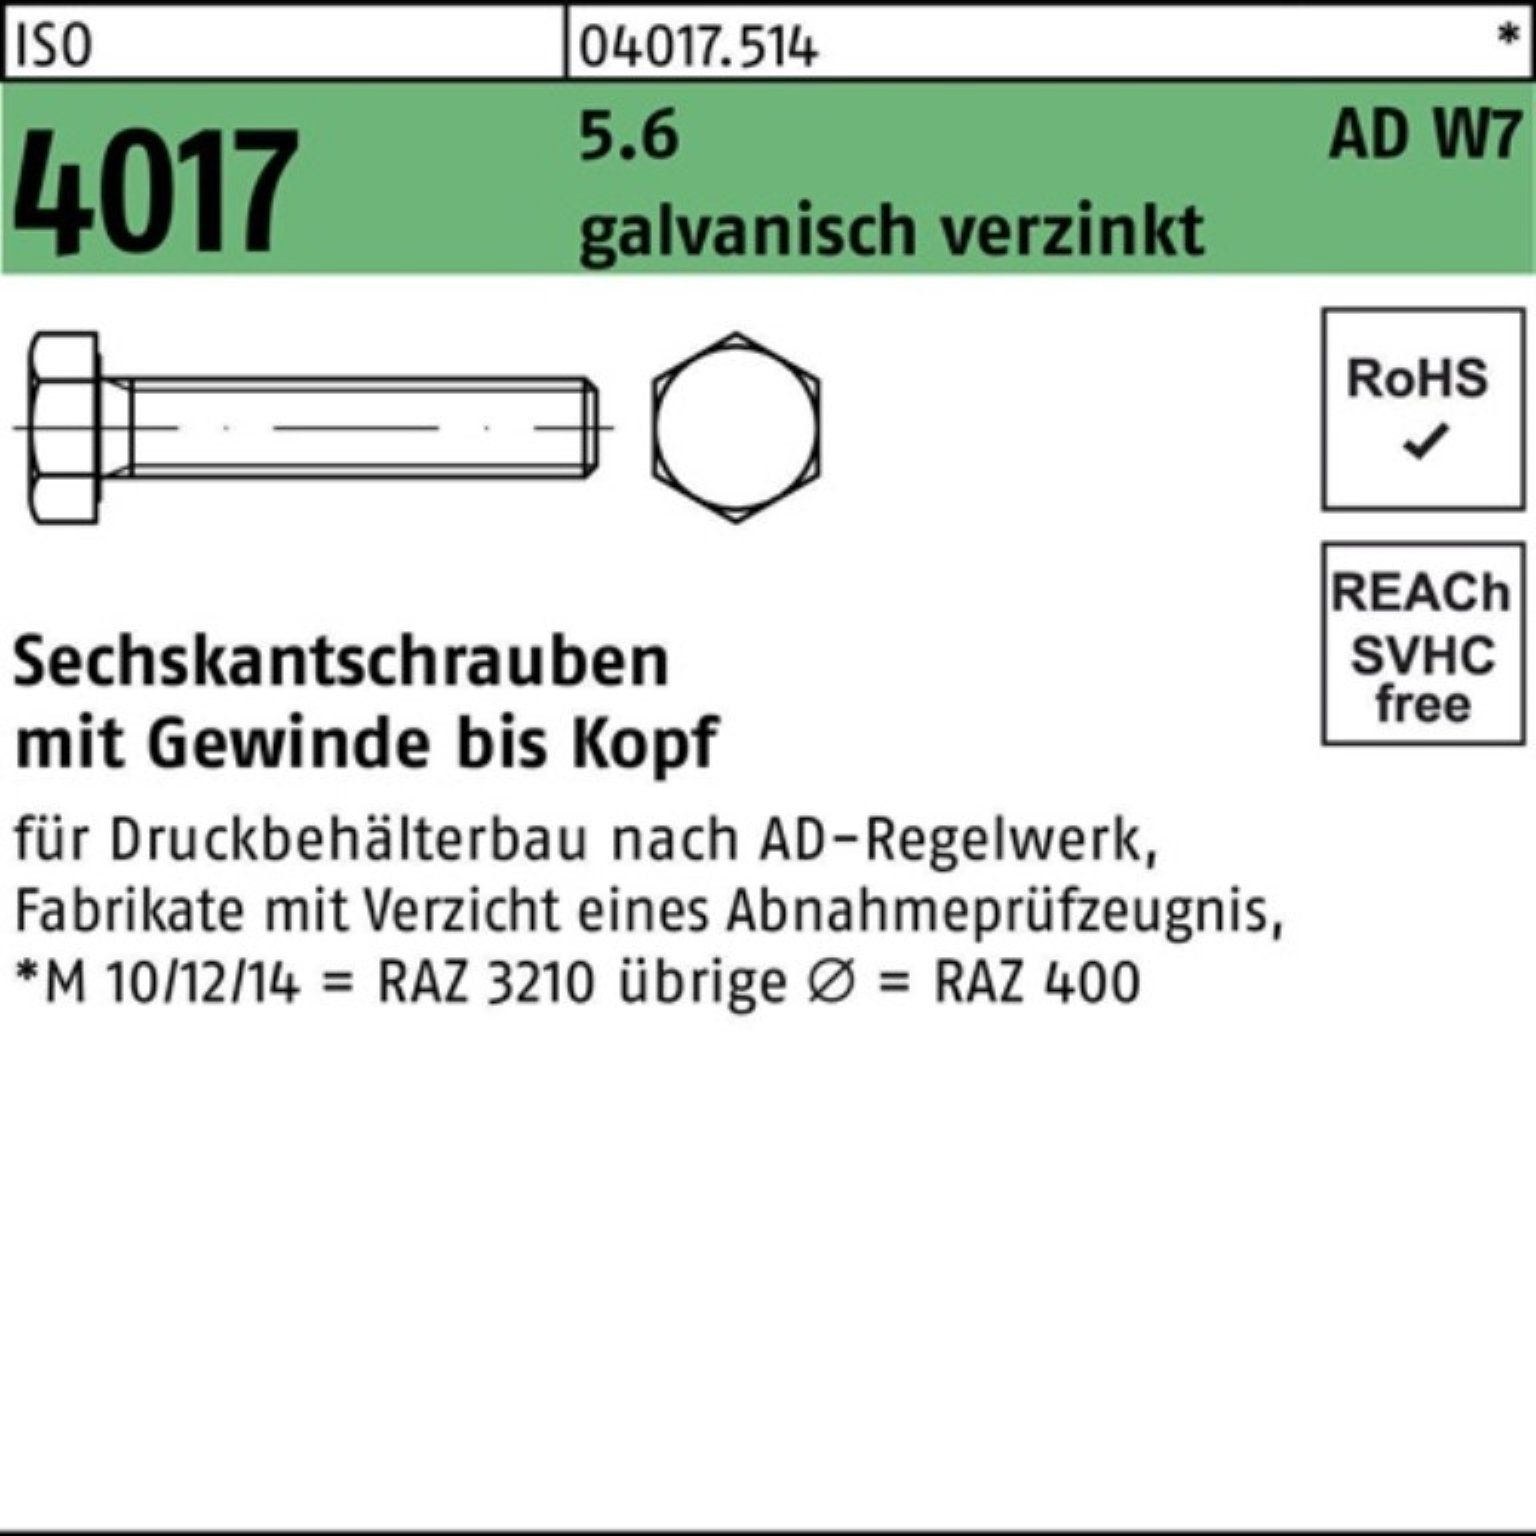 Bufab Sechskantschraube 100er Pack M27x AD galv.verz. VG 140 5.6 W7 4017 ISO Sechskantschraube